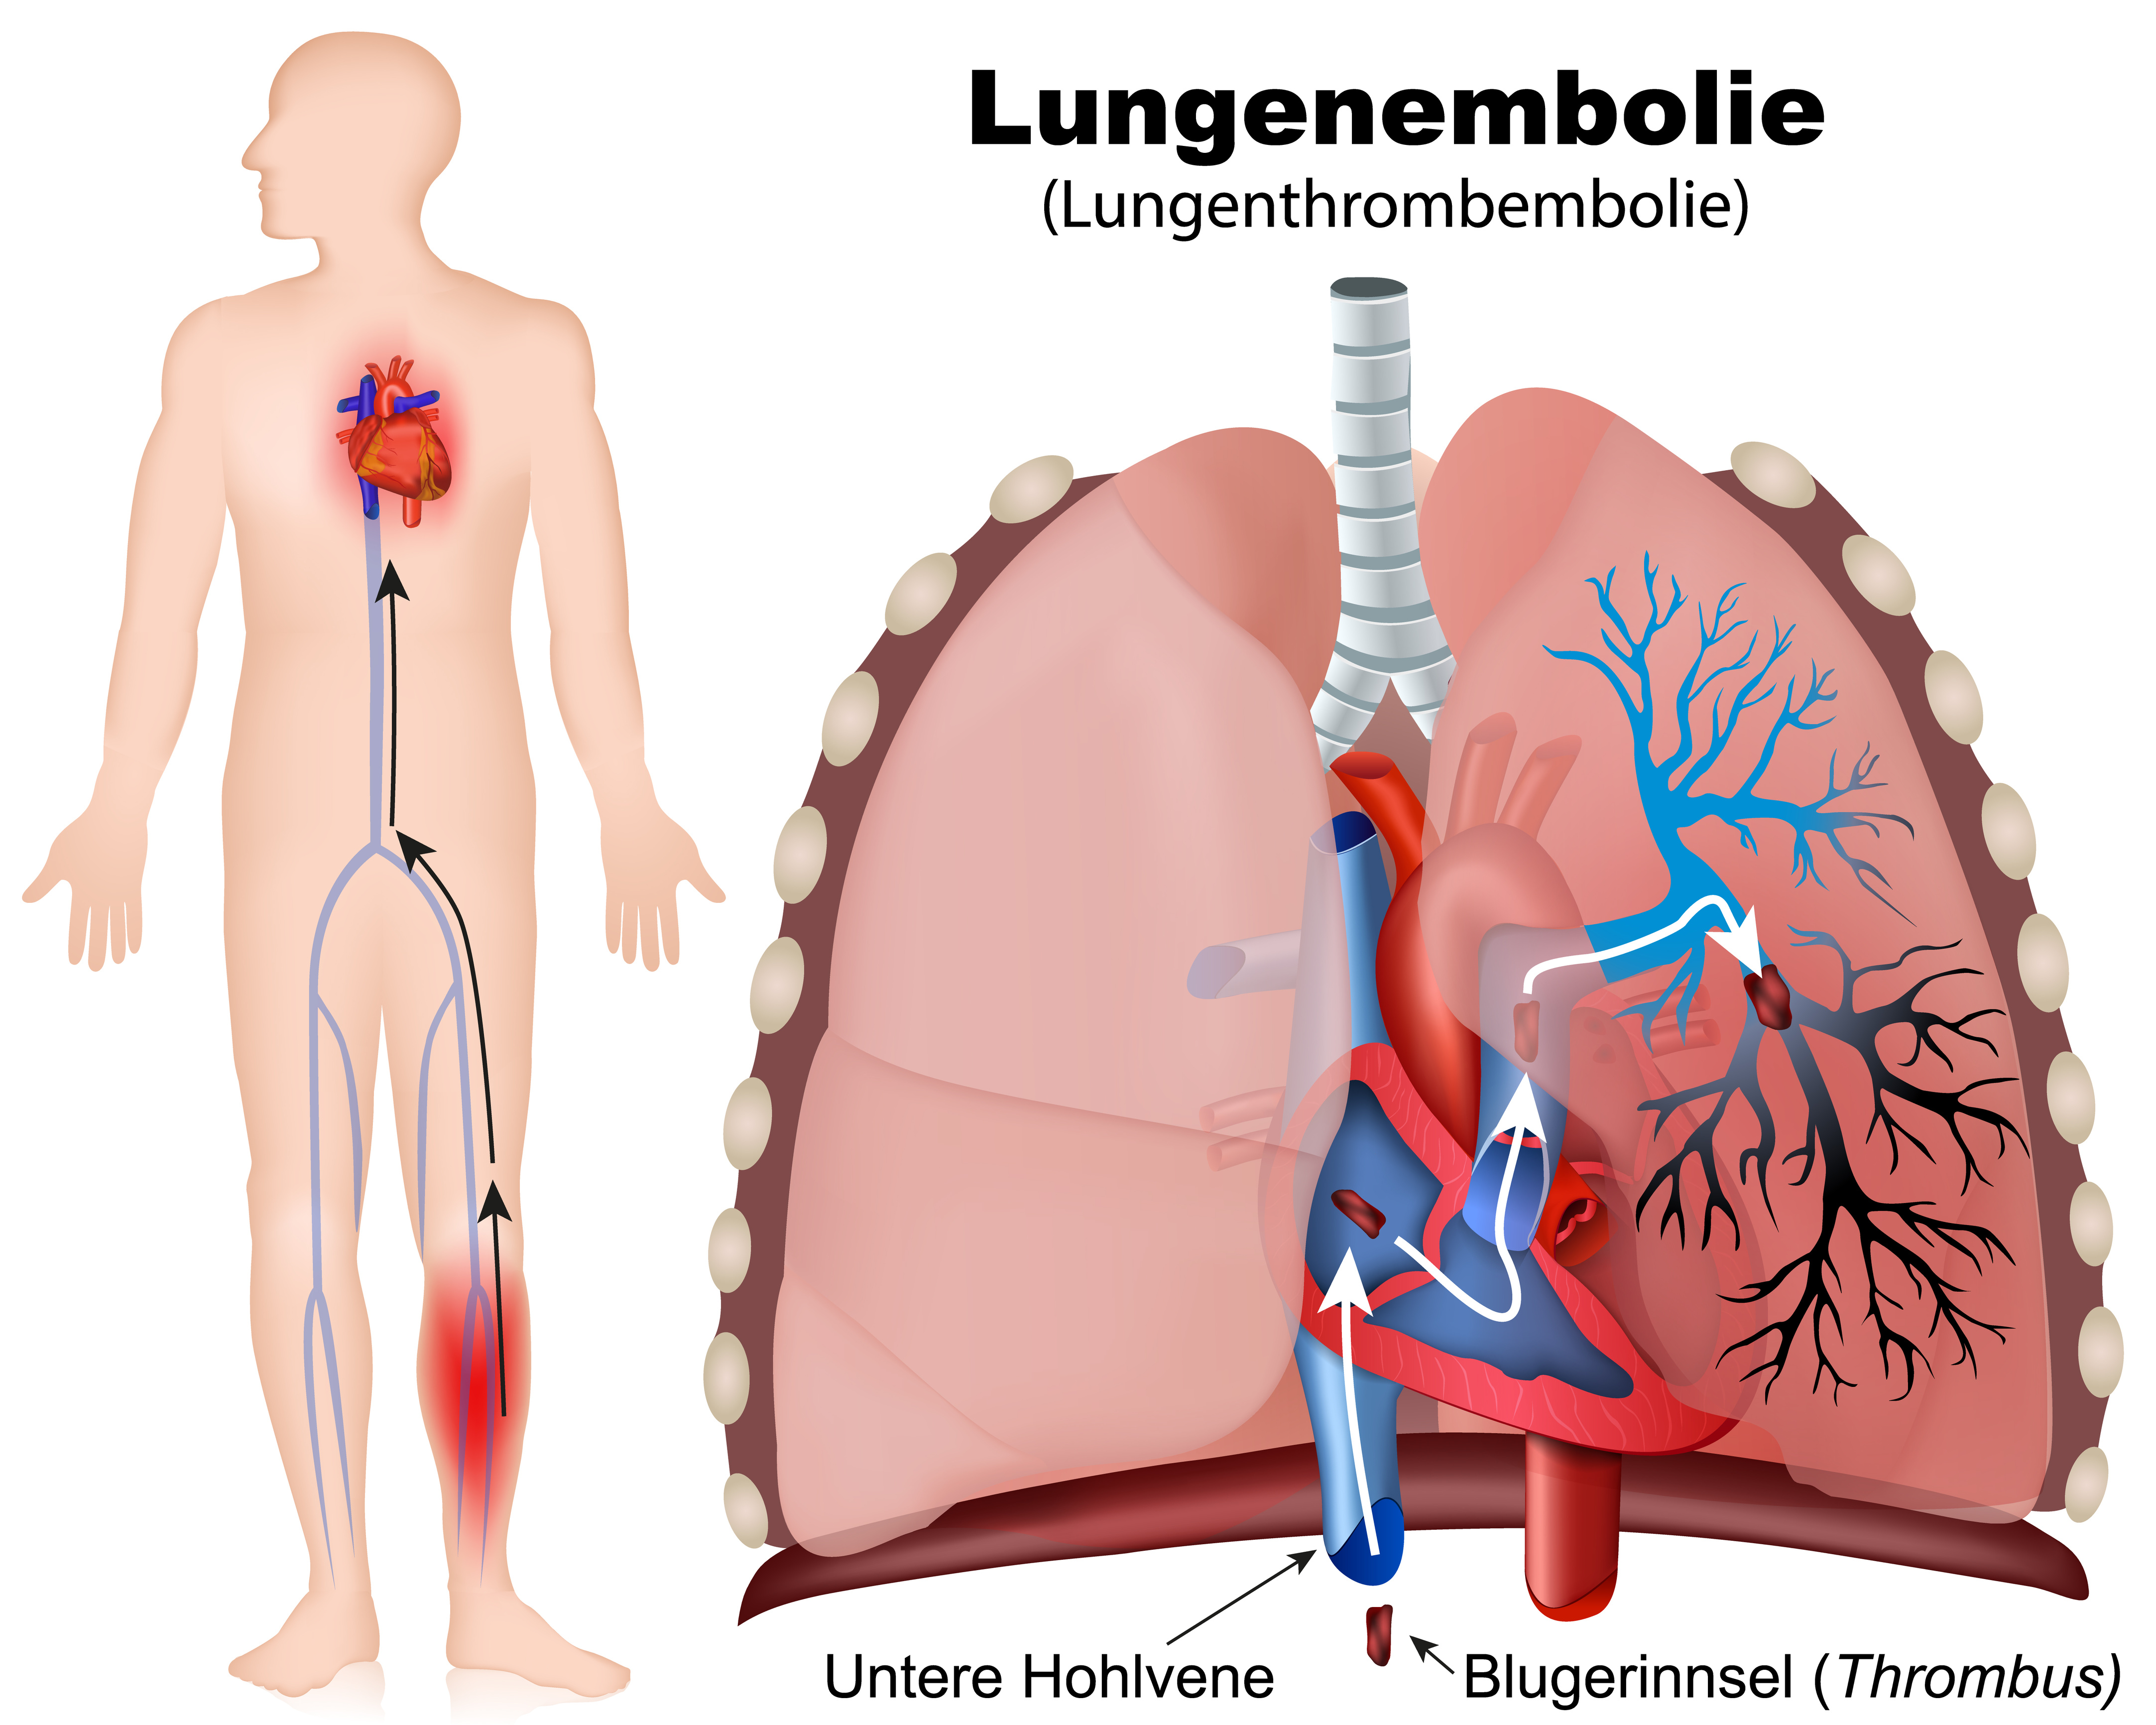 Тромбозы и эмболии артерий. Тромбоэмболия легочной артерии. Тромбоэмболия легочной артерии (Тэла). 1. Тромбоэмболия лёгочной артерии. Тромбоэмболия а8 легочной артерии.